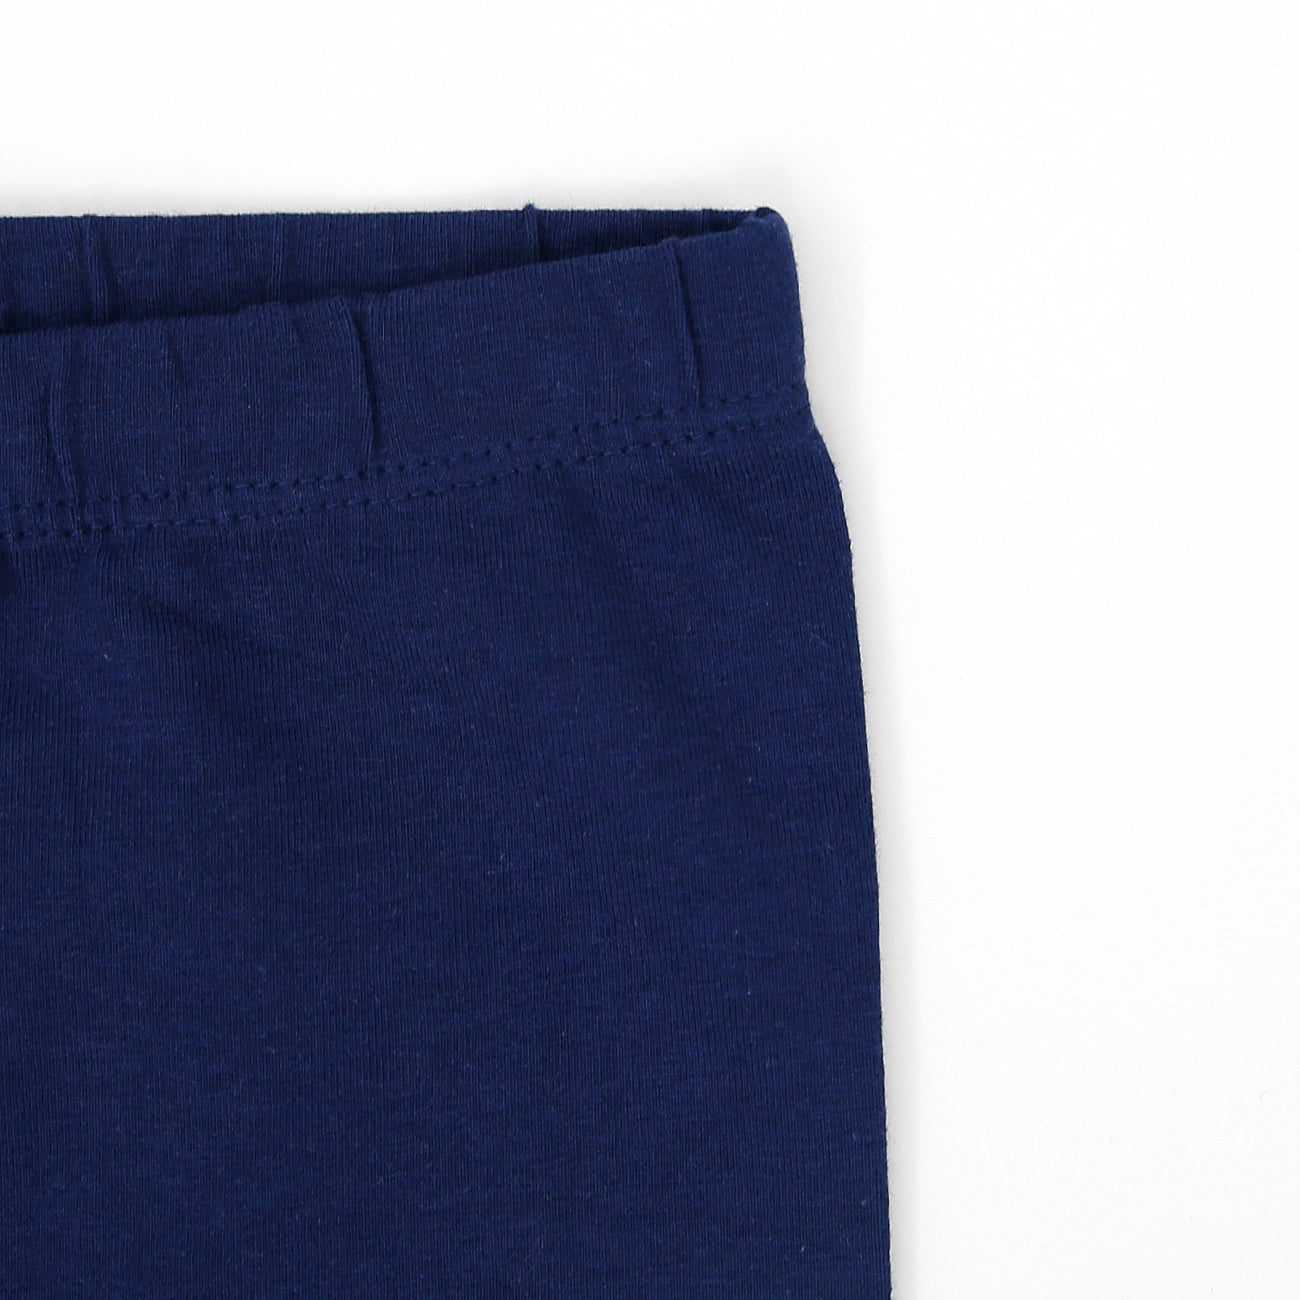 Imported Blue Soft Cotton Legging For Girls (11549)